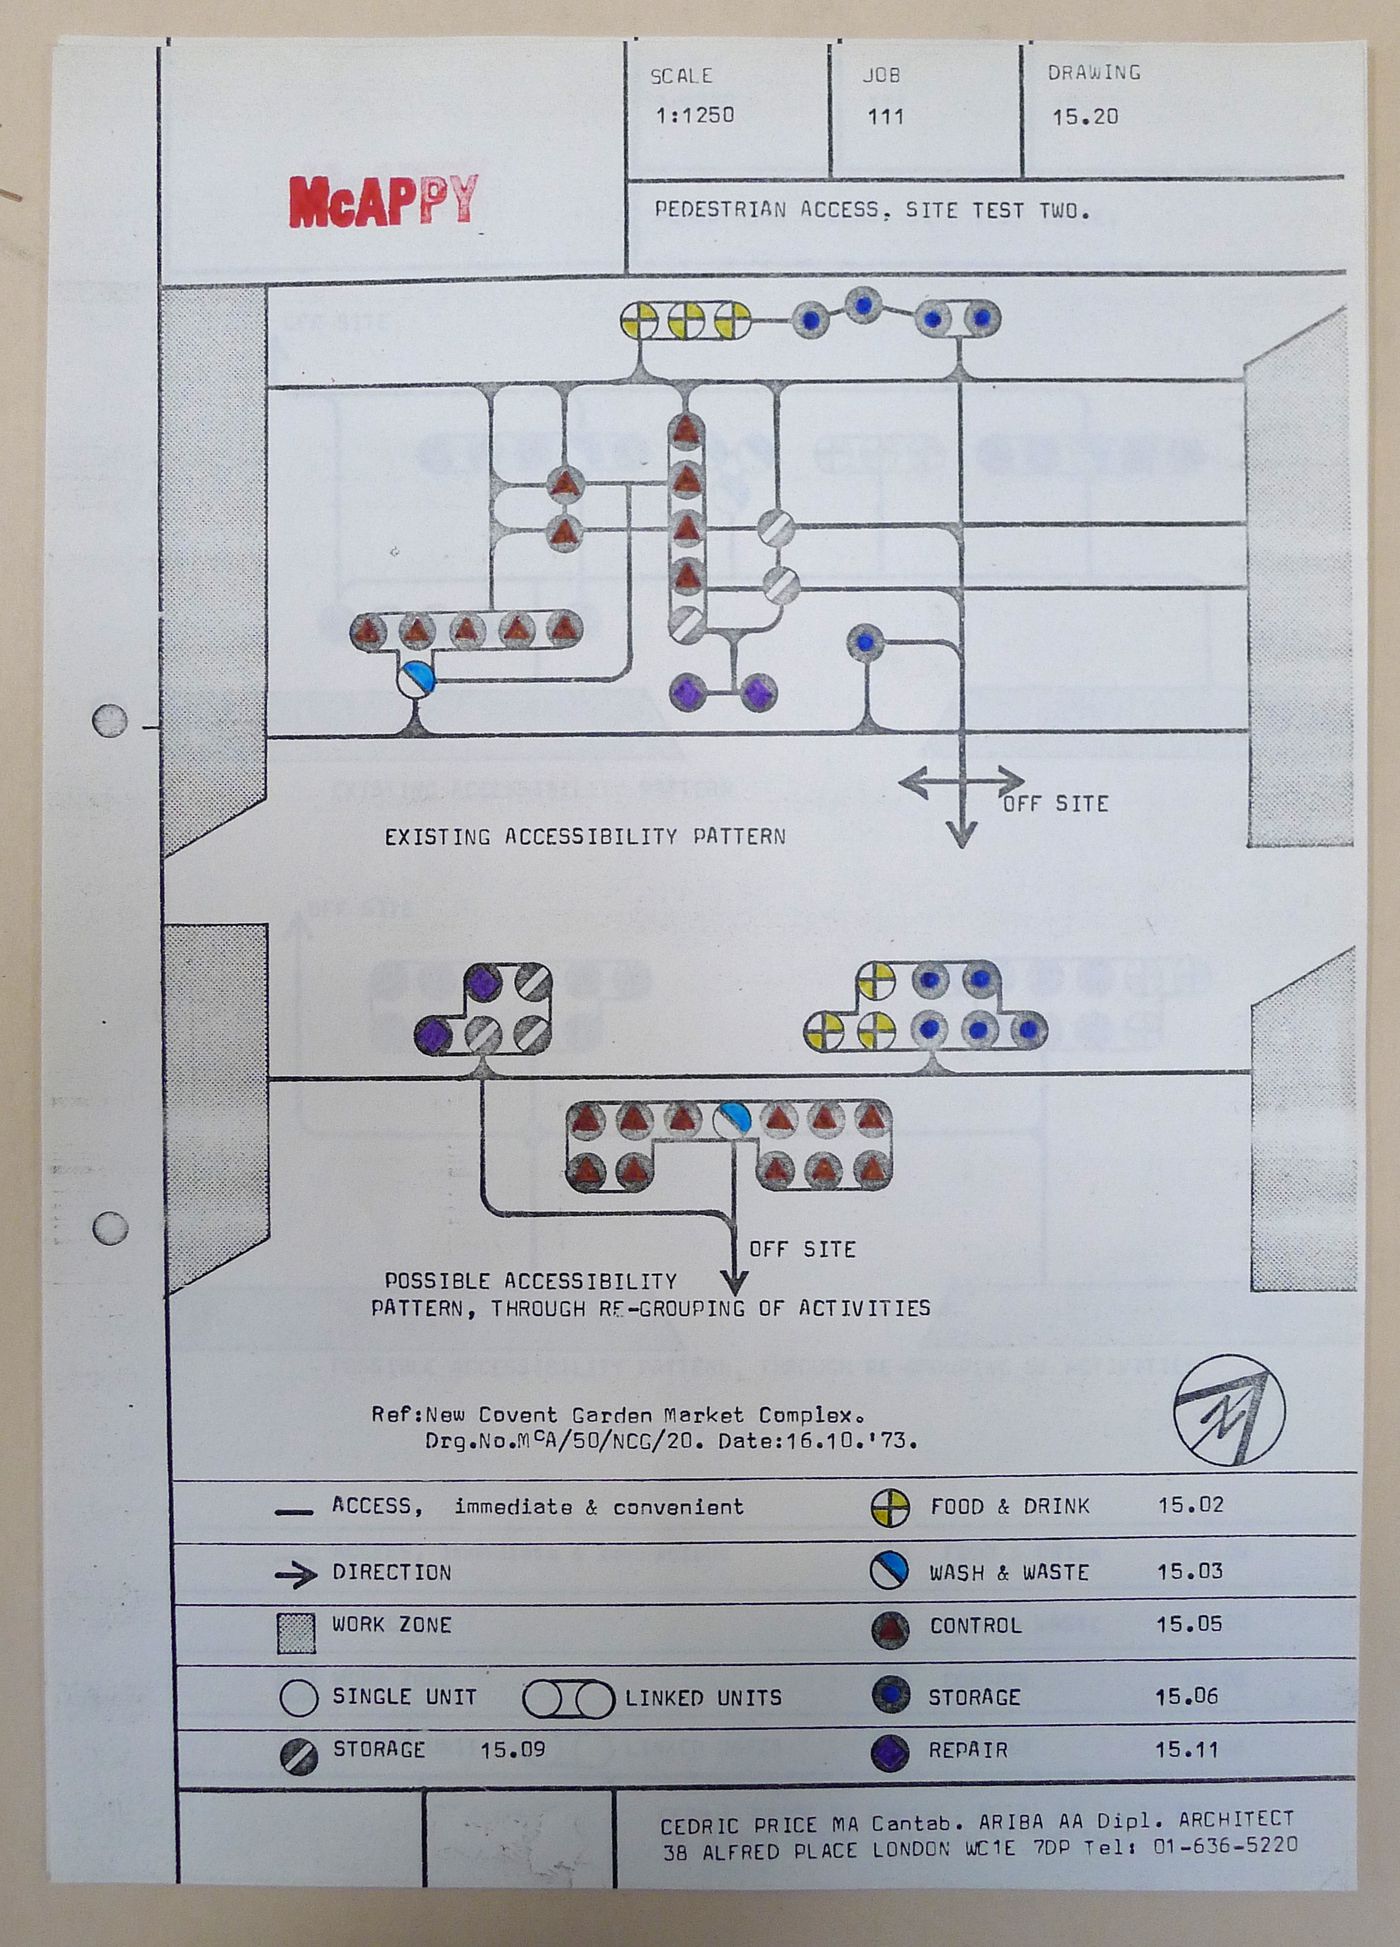 McAppy: diagram illustrating pedestrain access, site test two